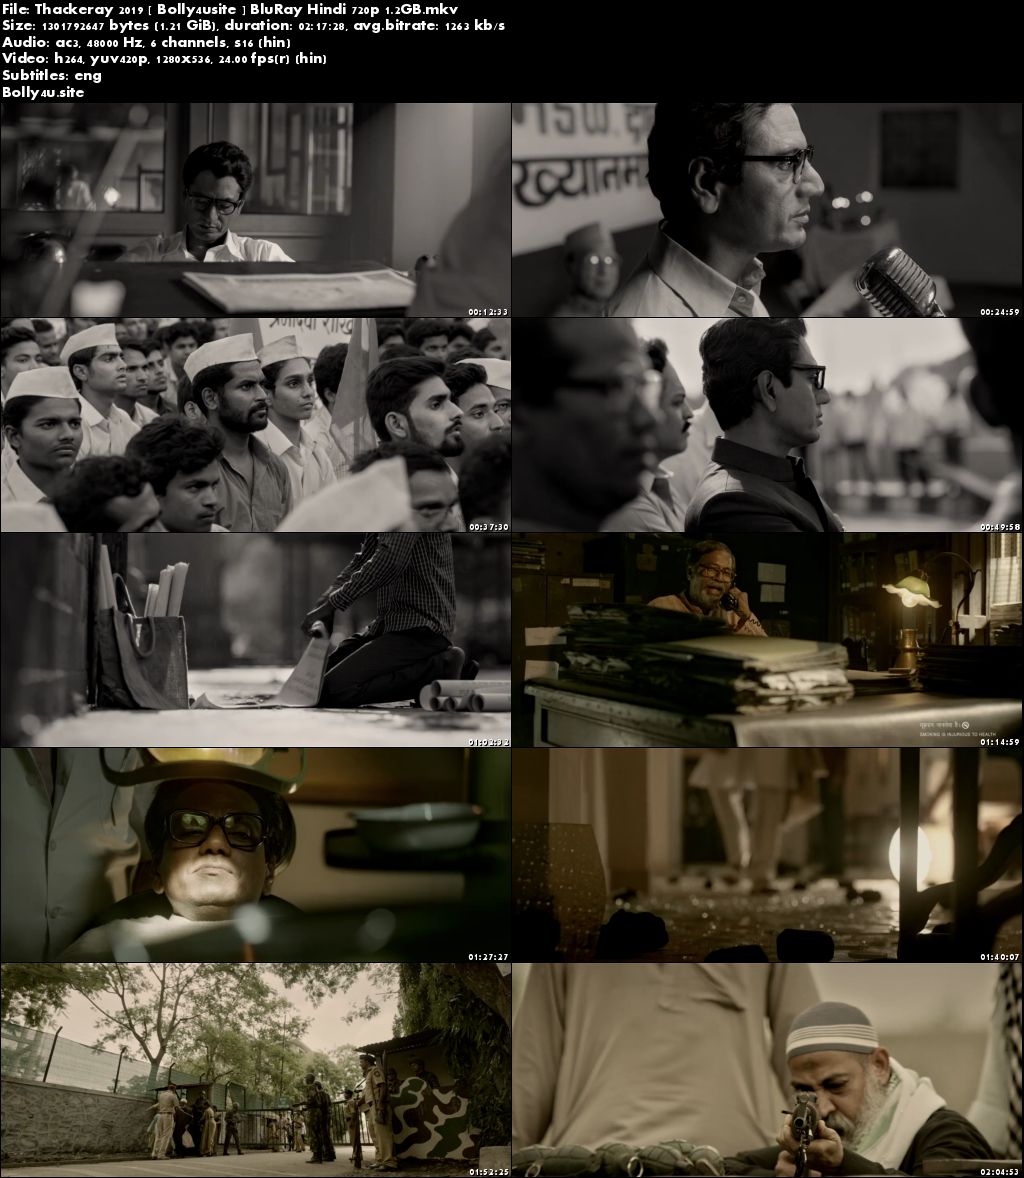 Thackeray 2019 BluRay Full Hindi Movie Download 720p ESub